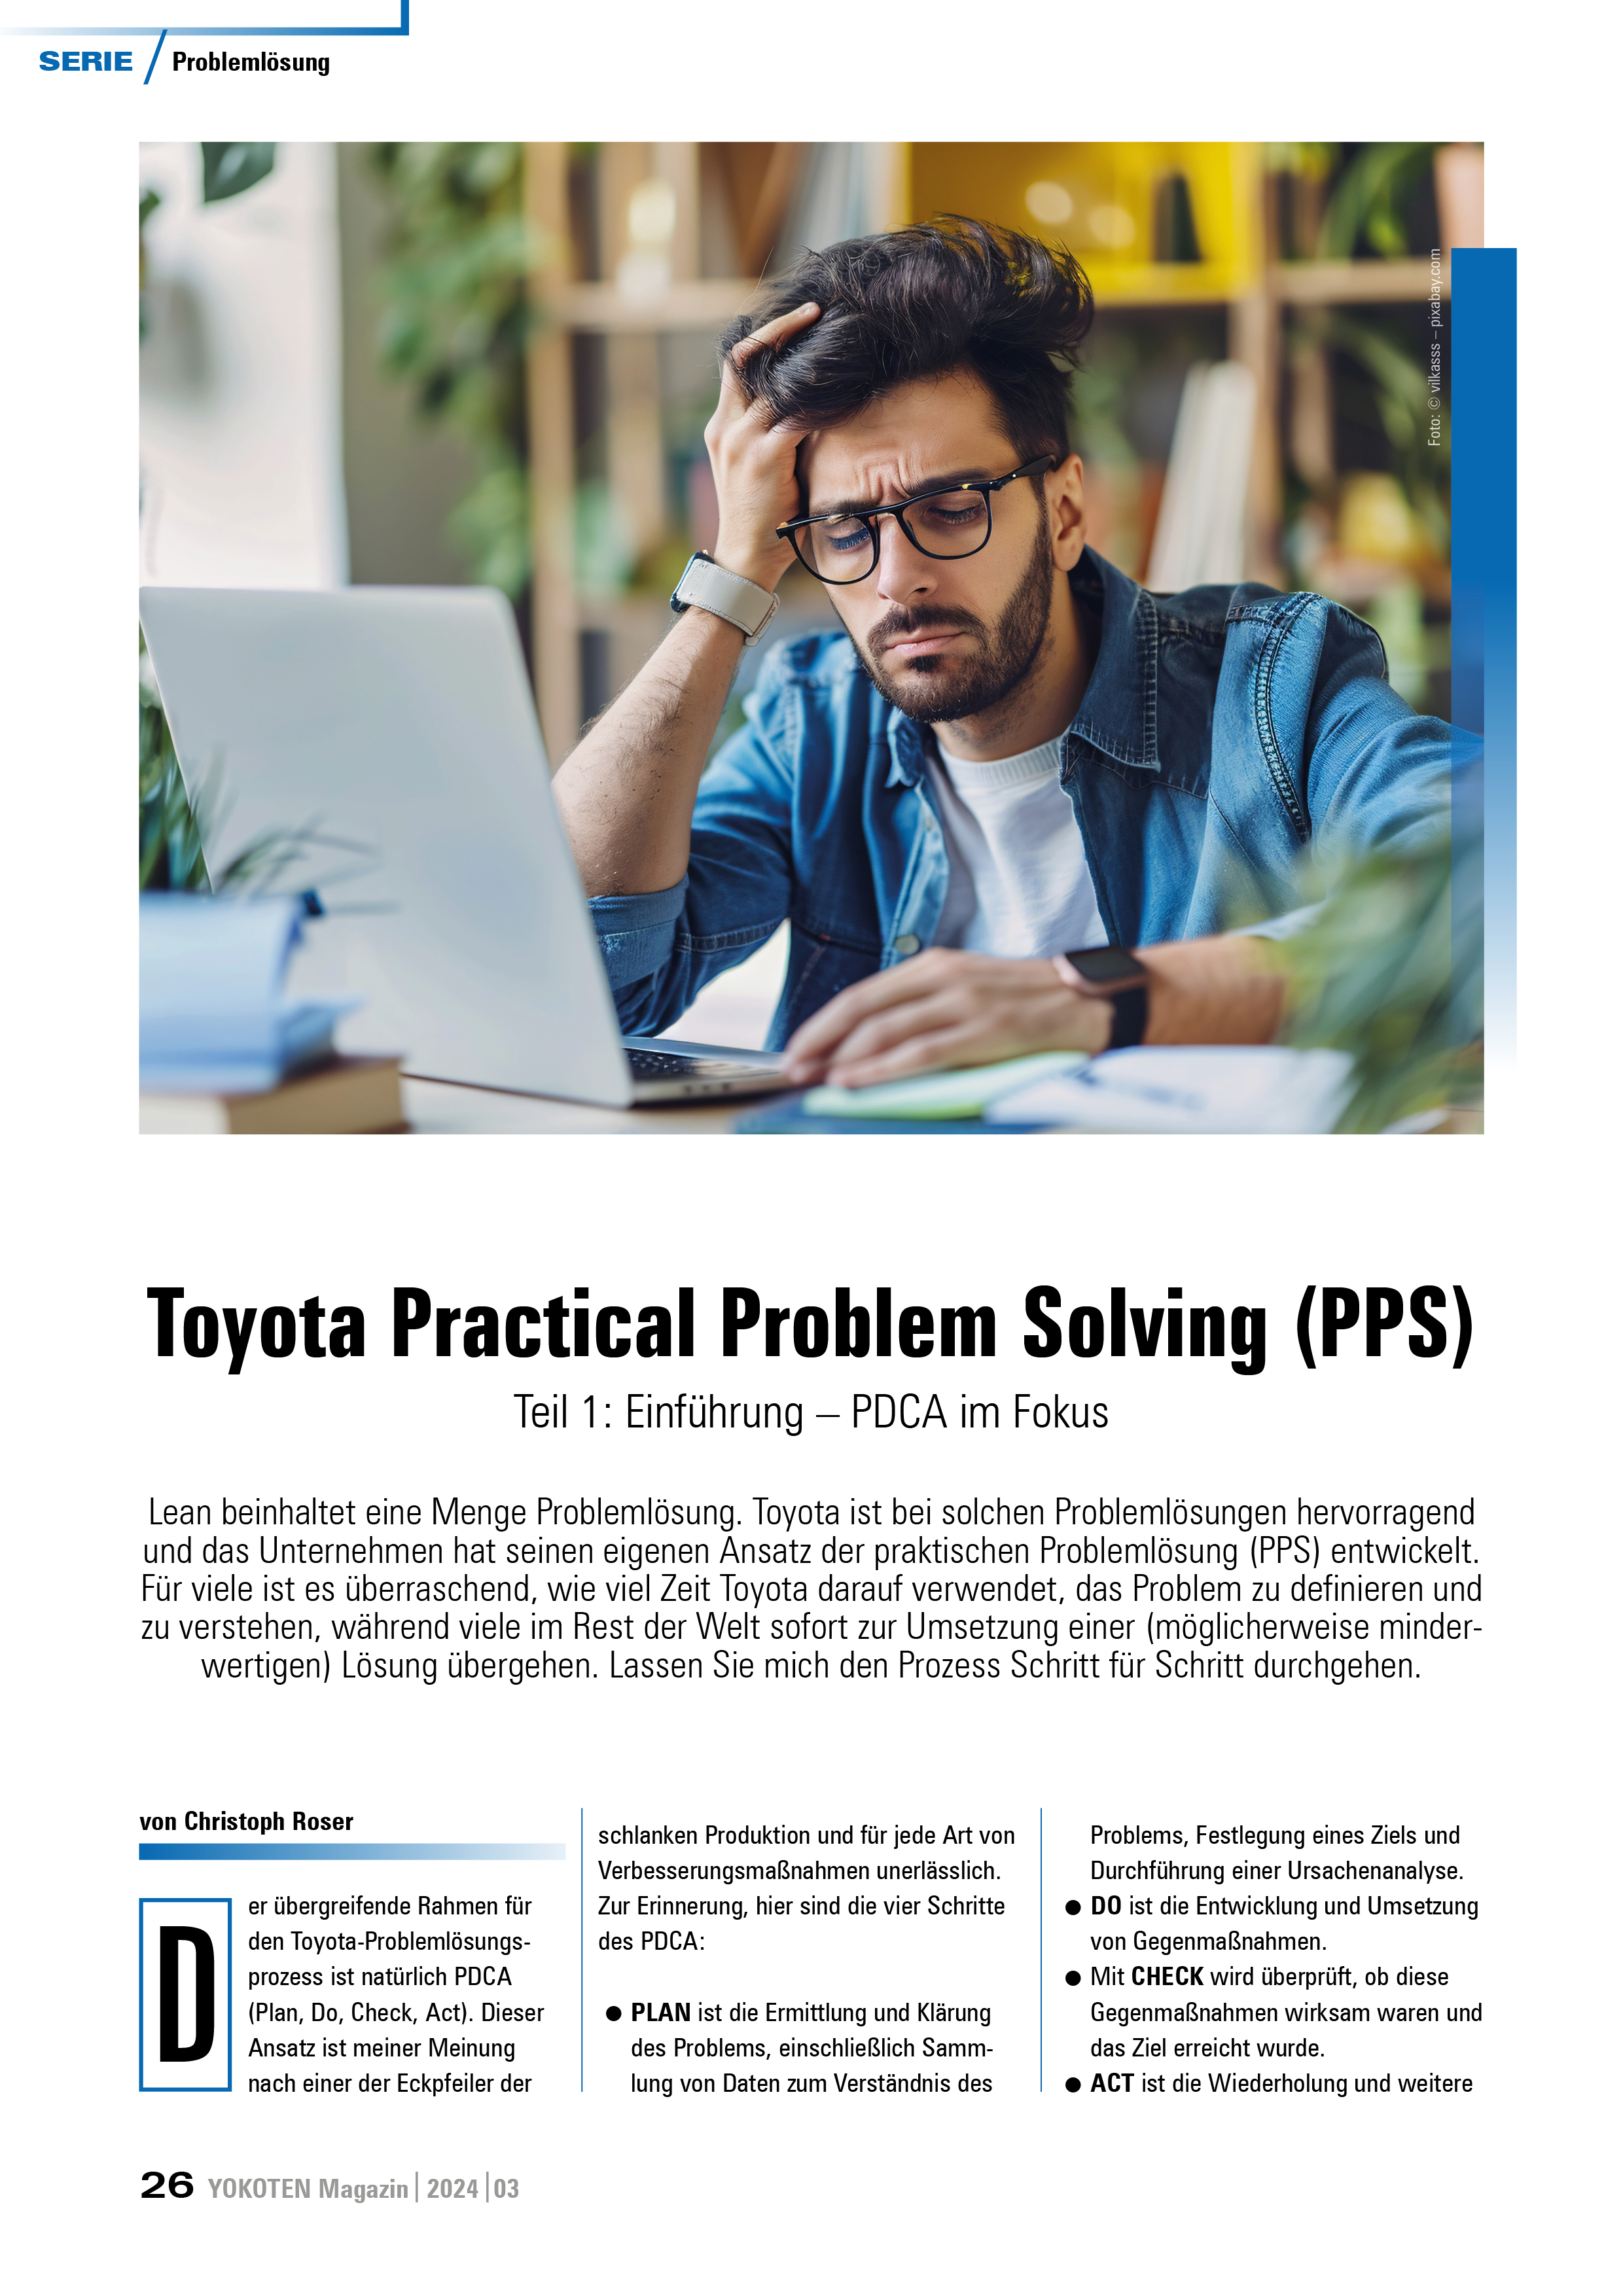 YOKOTEN-Artikel: Toyota Practical Problem Solving (PPS)